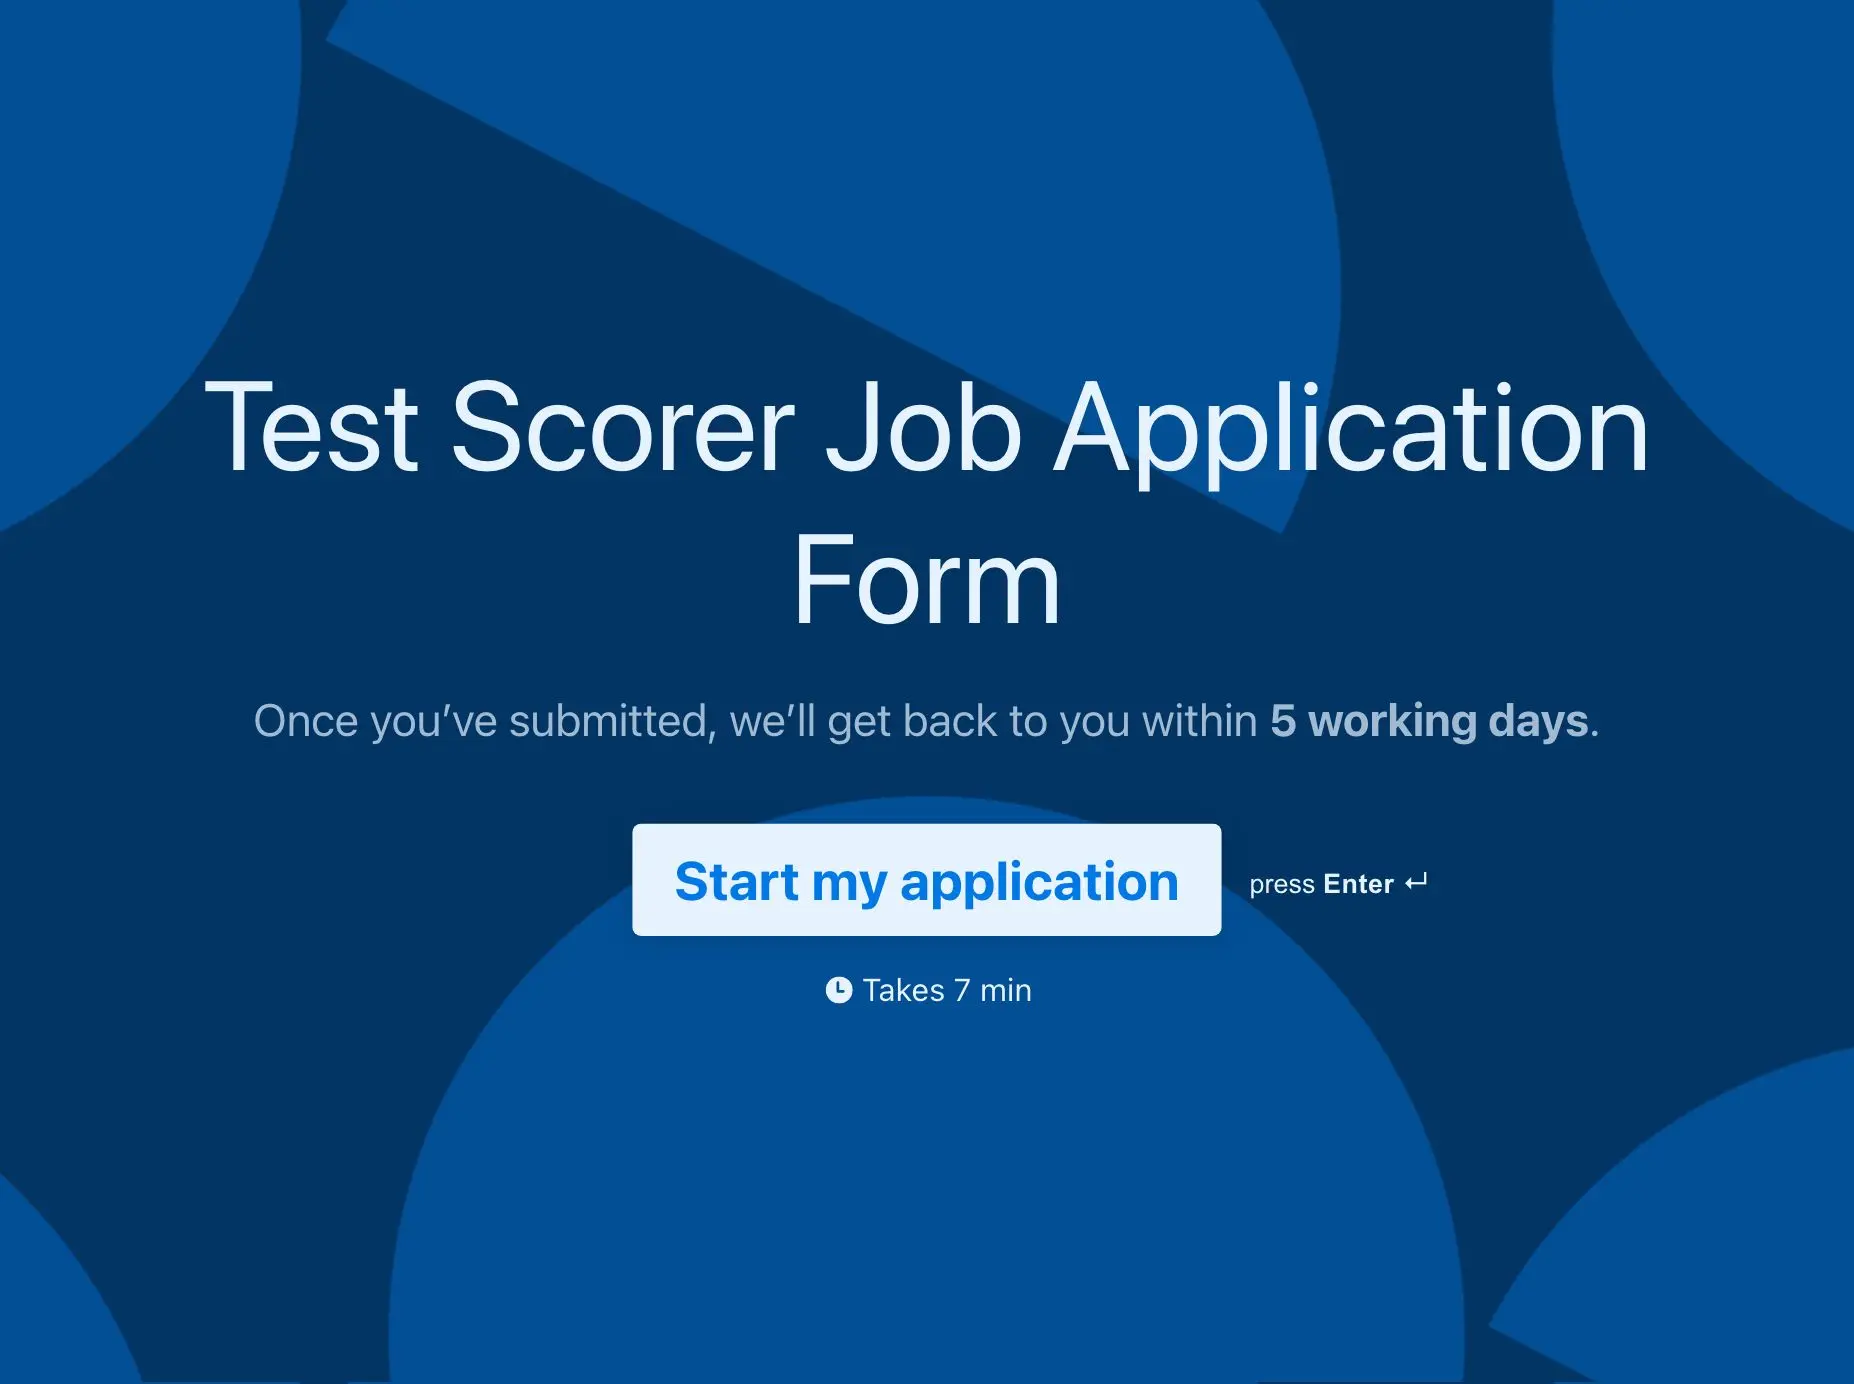 Test Scorer Job Application Form Template Hero